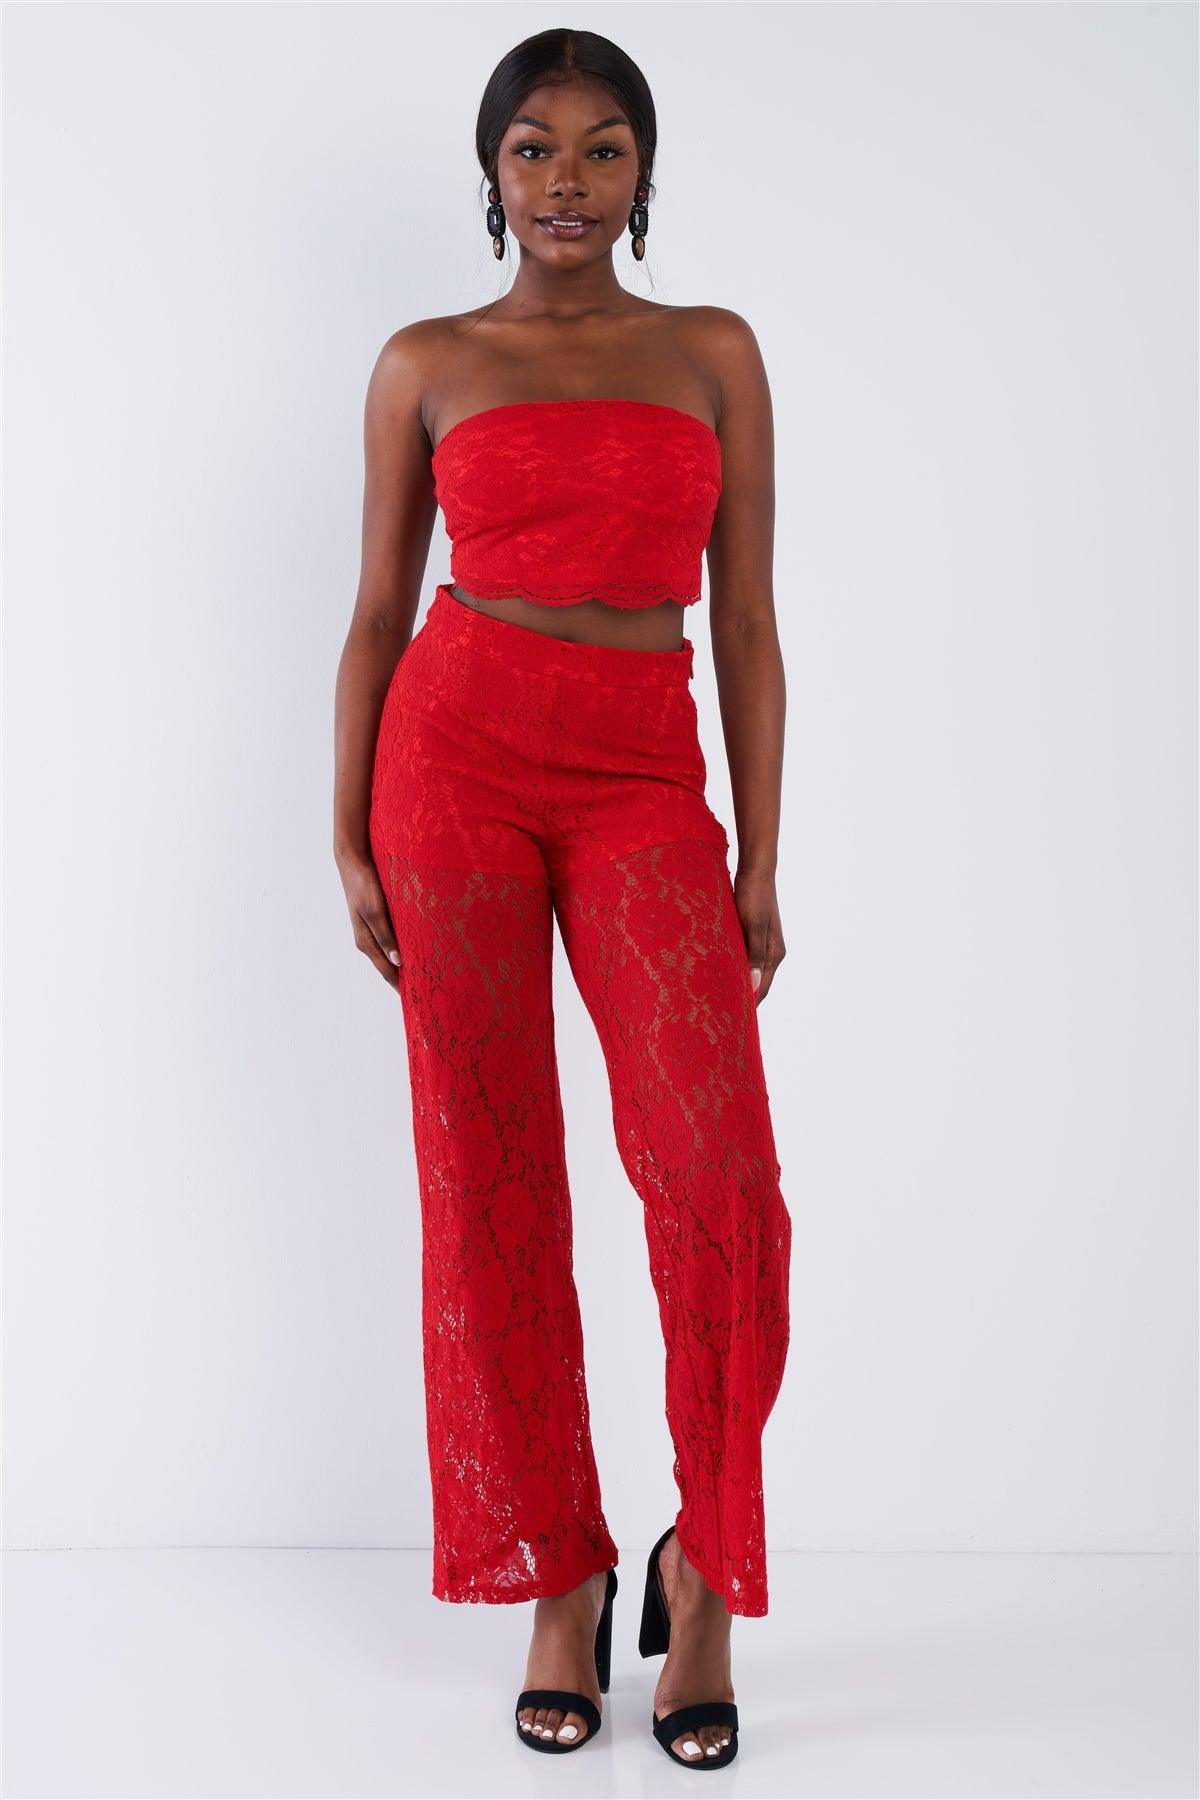 Red Floral Lace Bandeau & Flare High Waist Boho Pant Set  /2-2-2